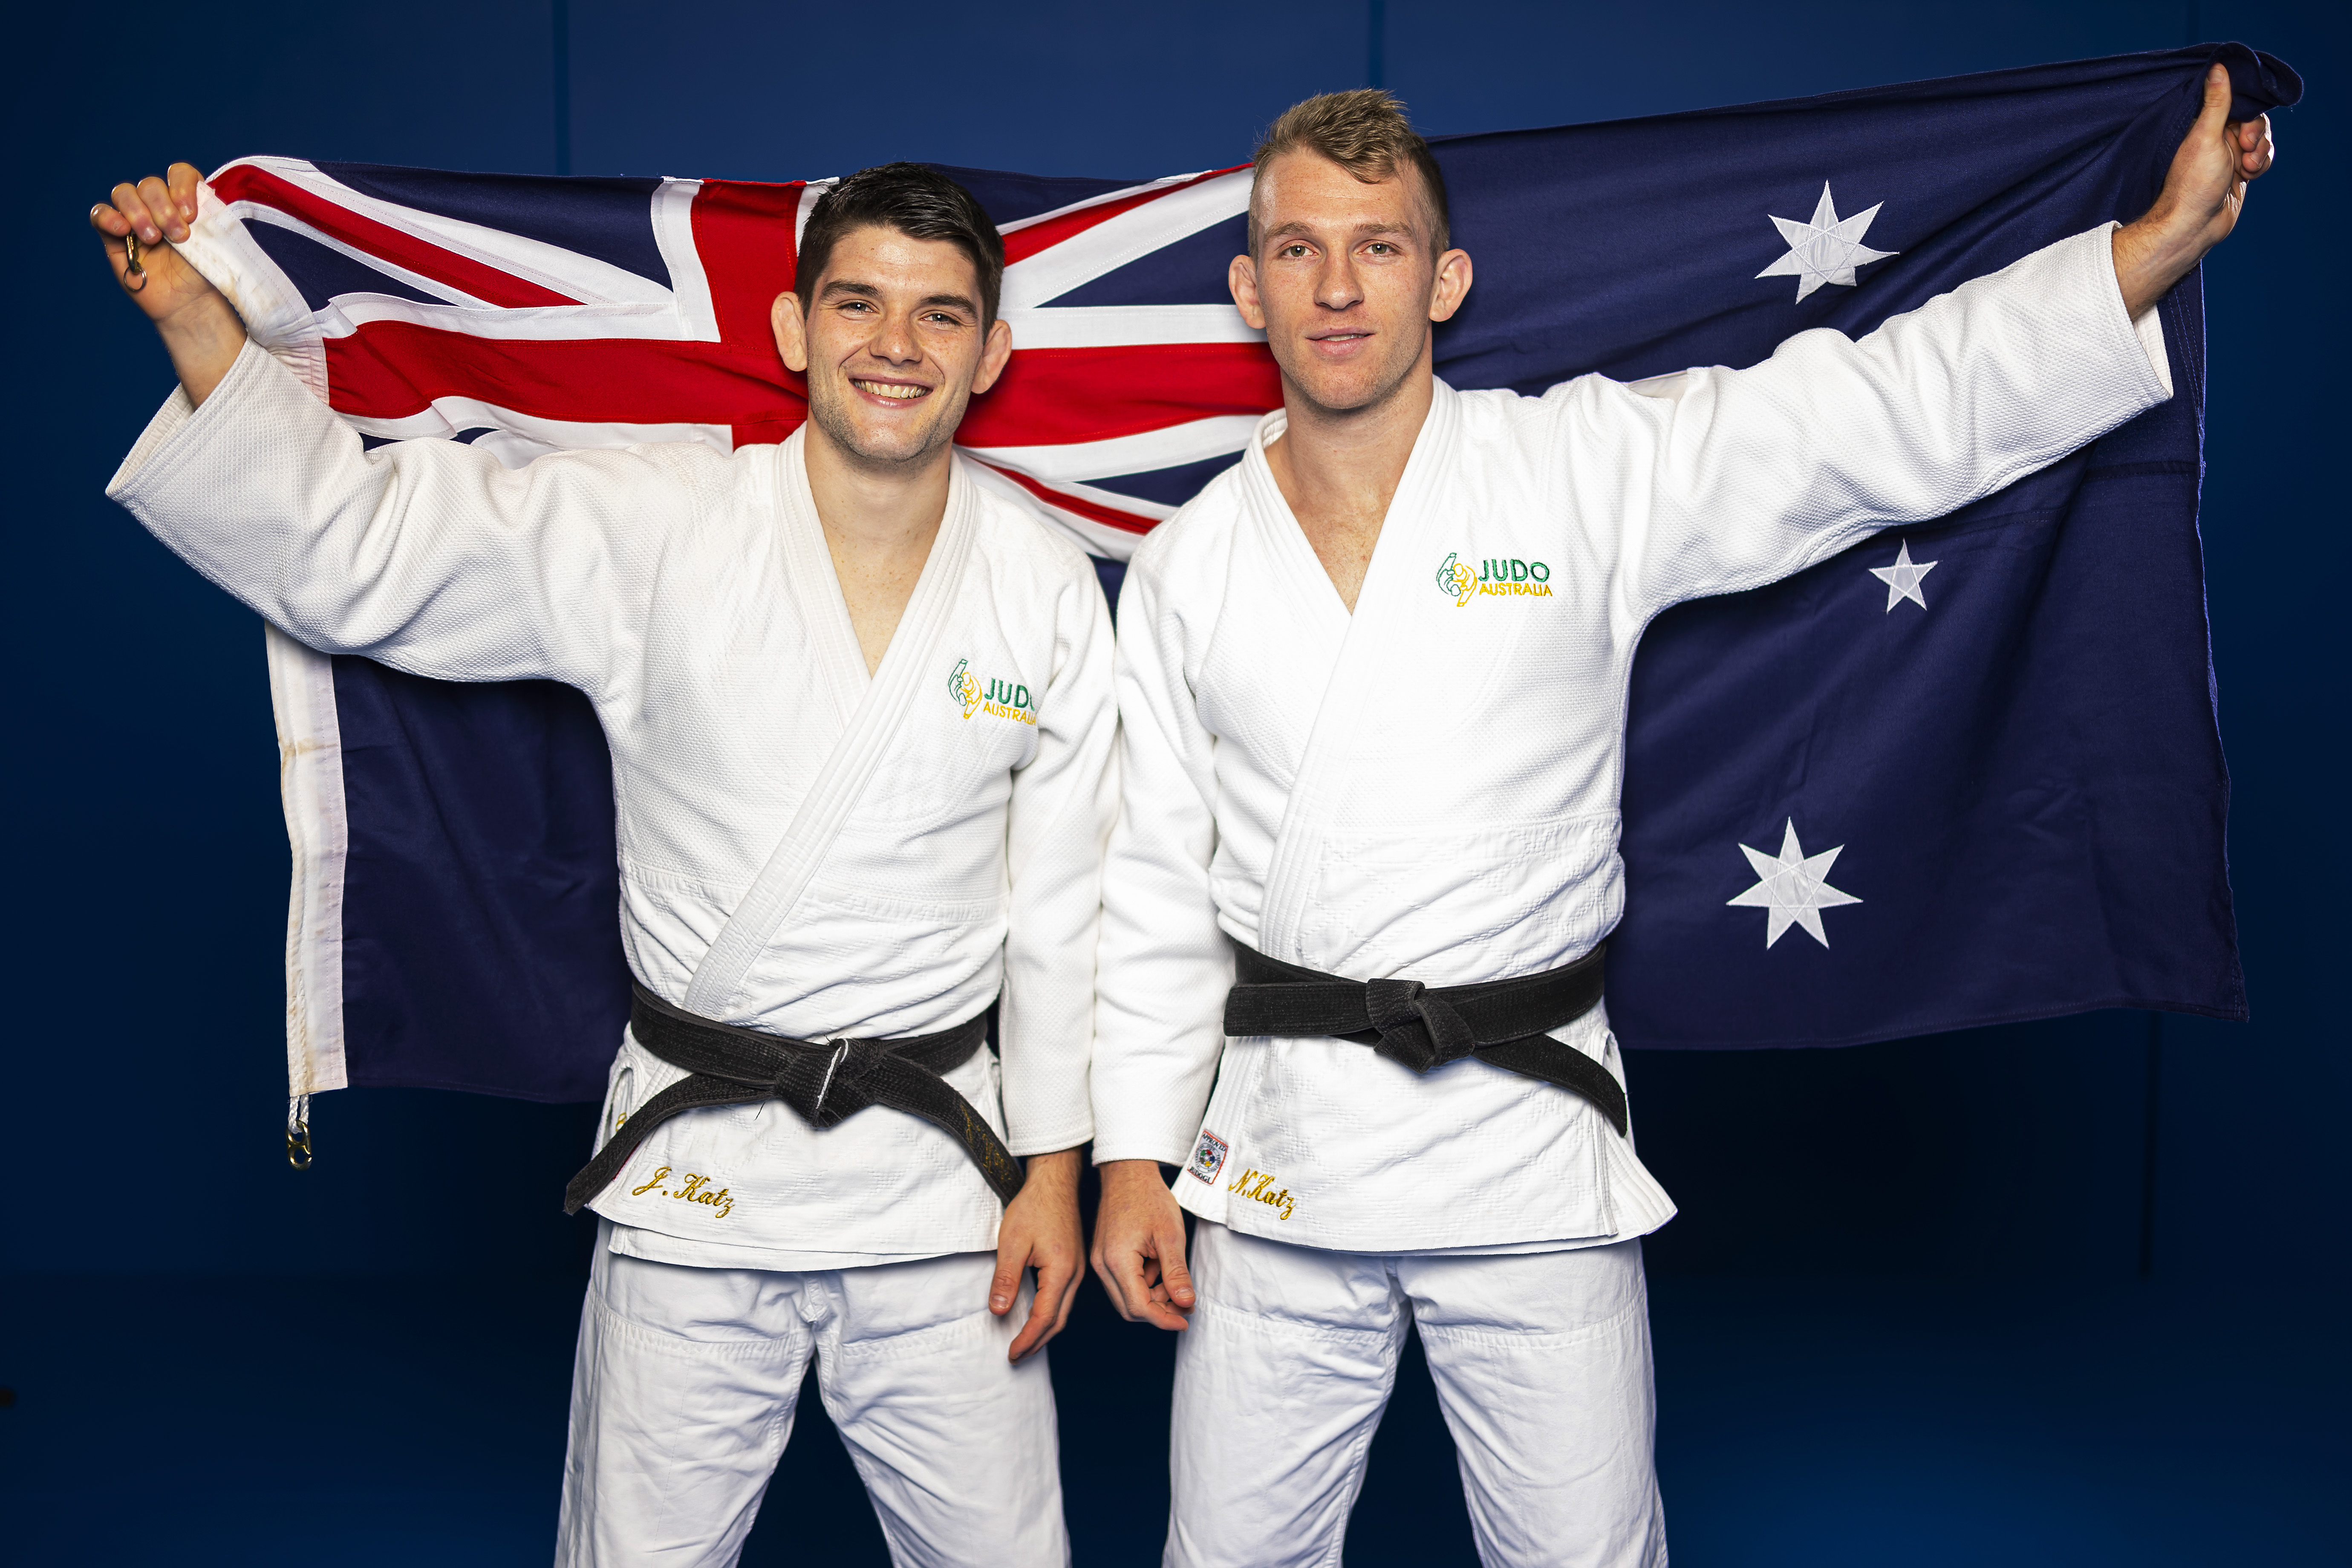 The Katz brothers hold Australian flag.